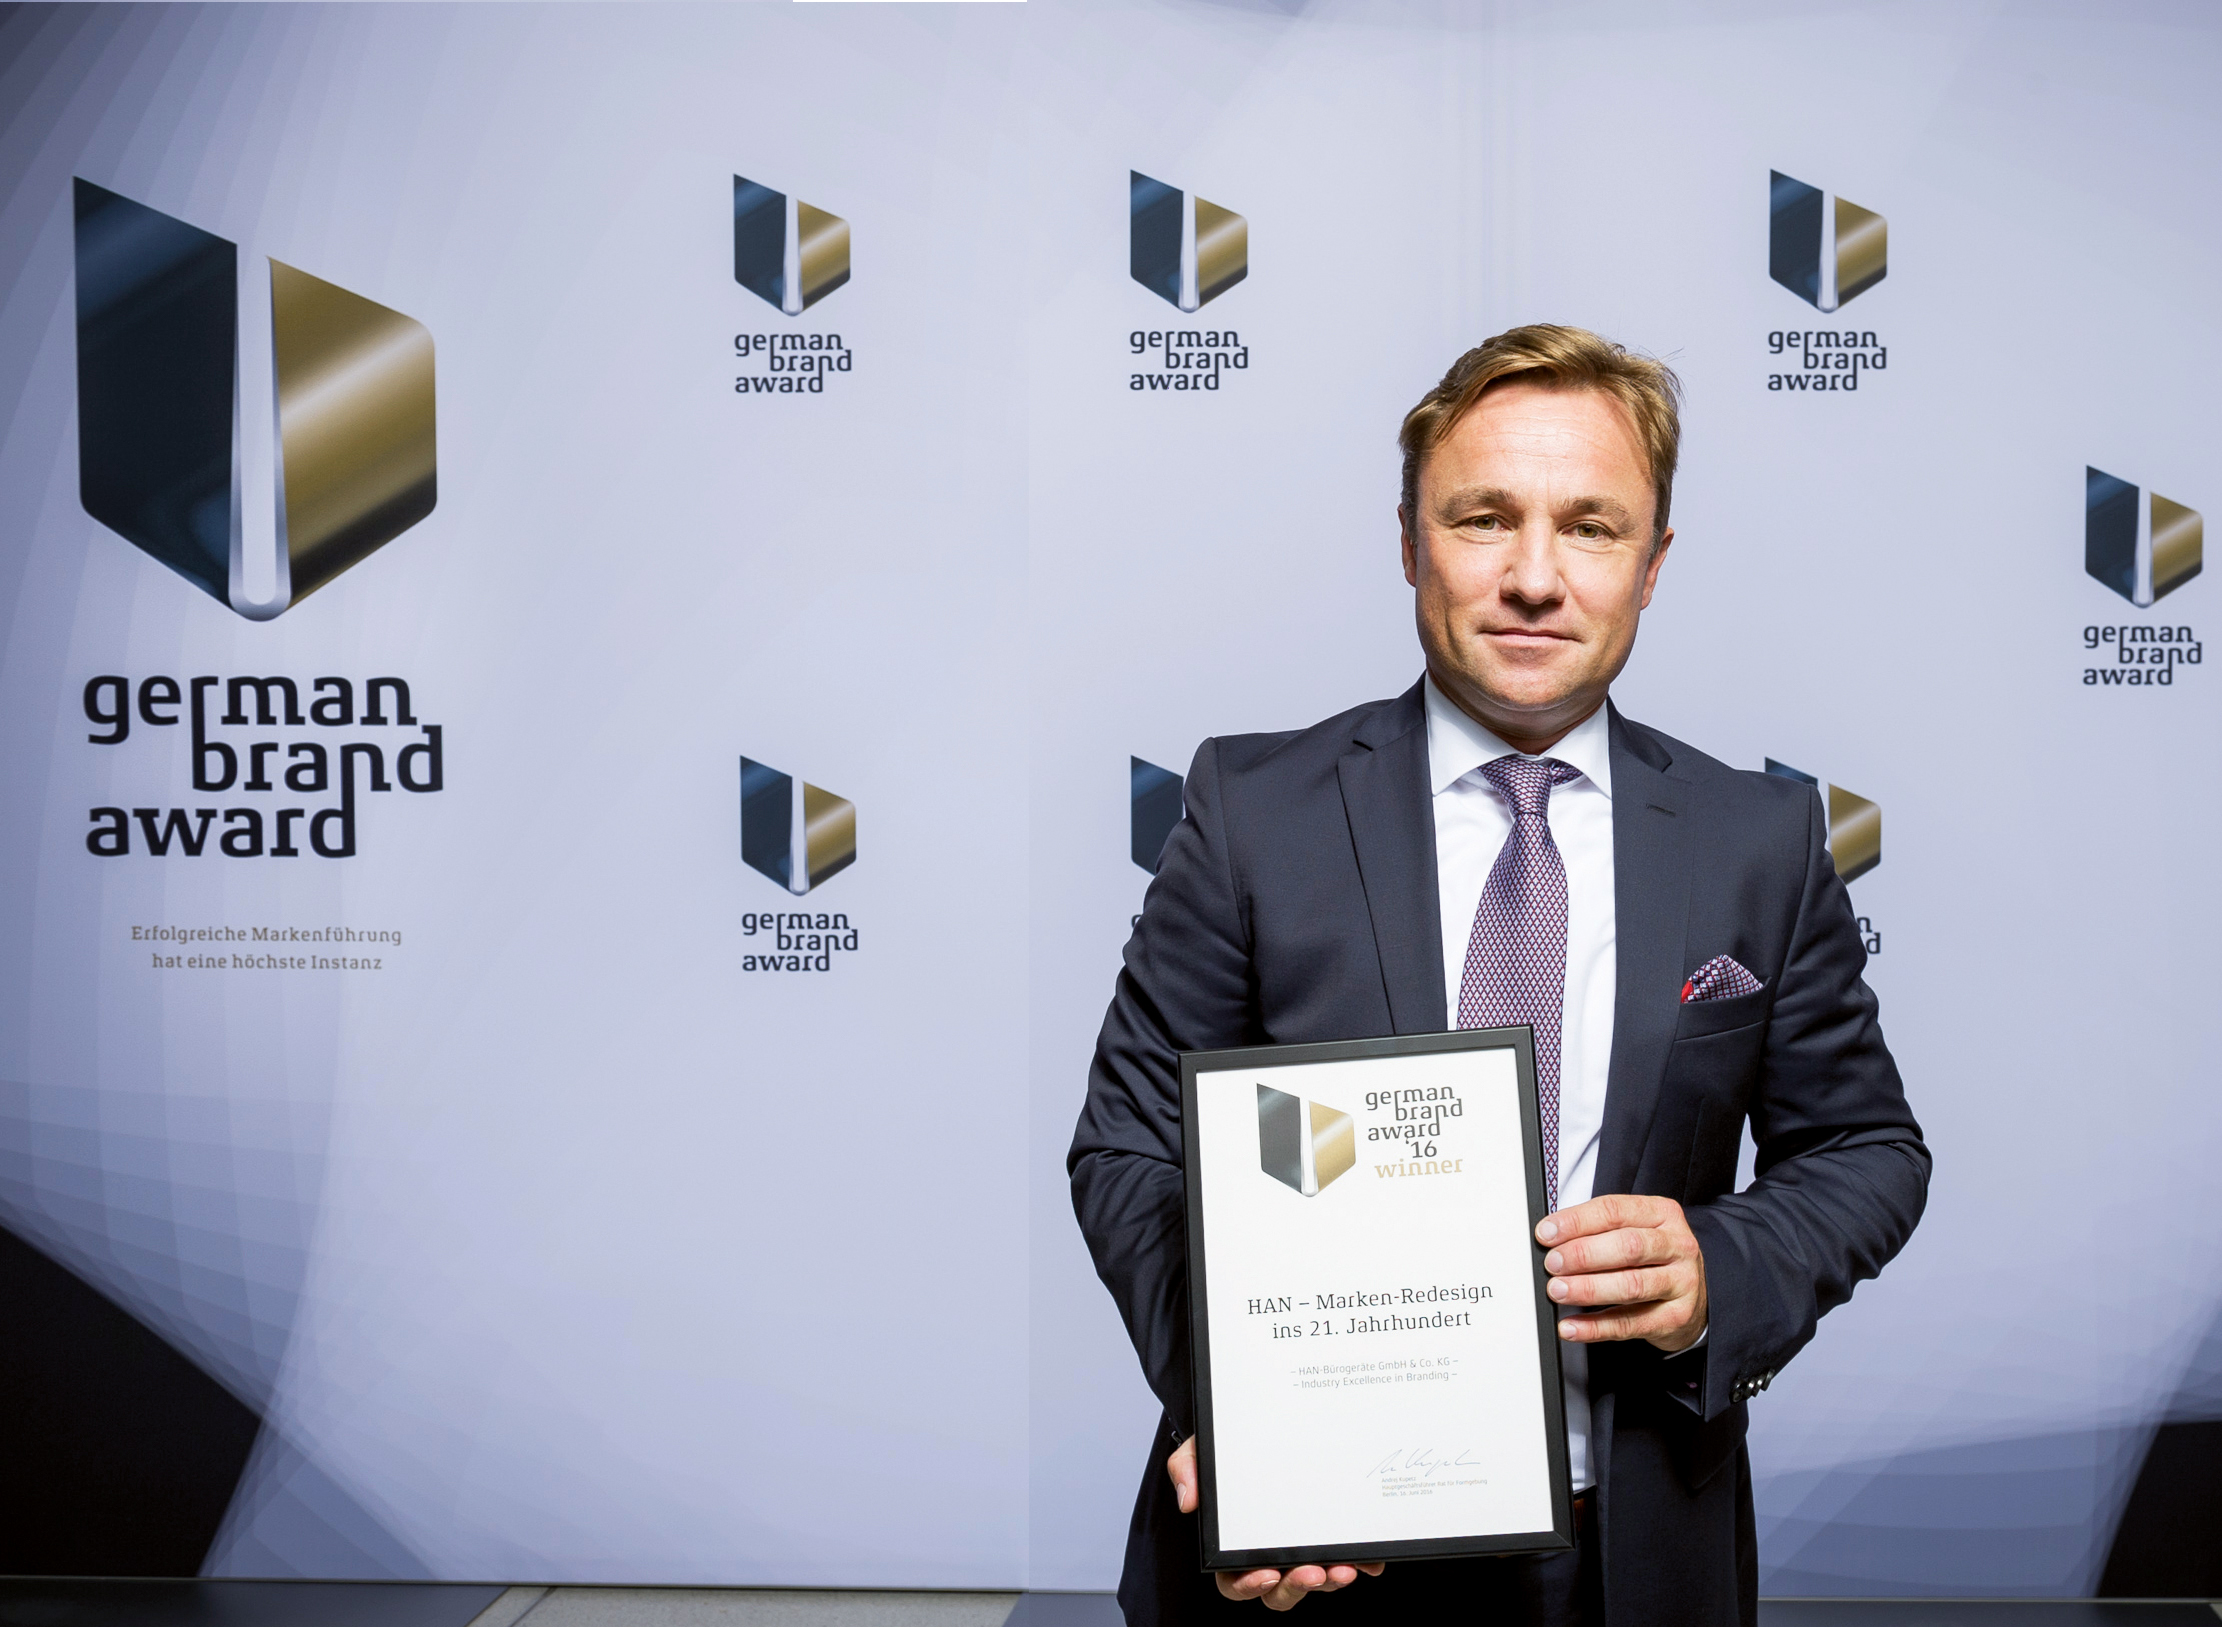 Presentation of the certificate German Brand Award 2016